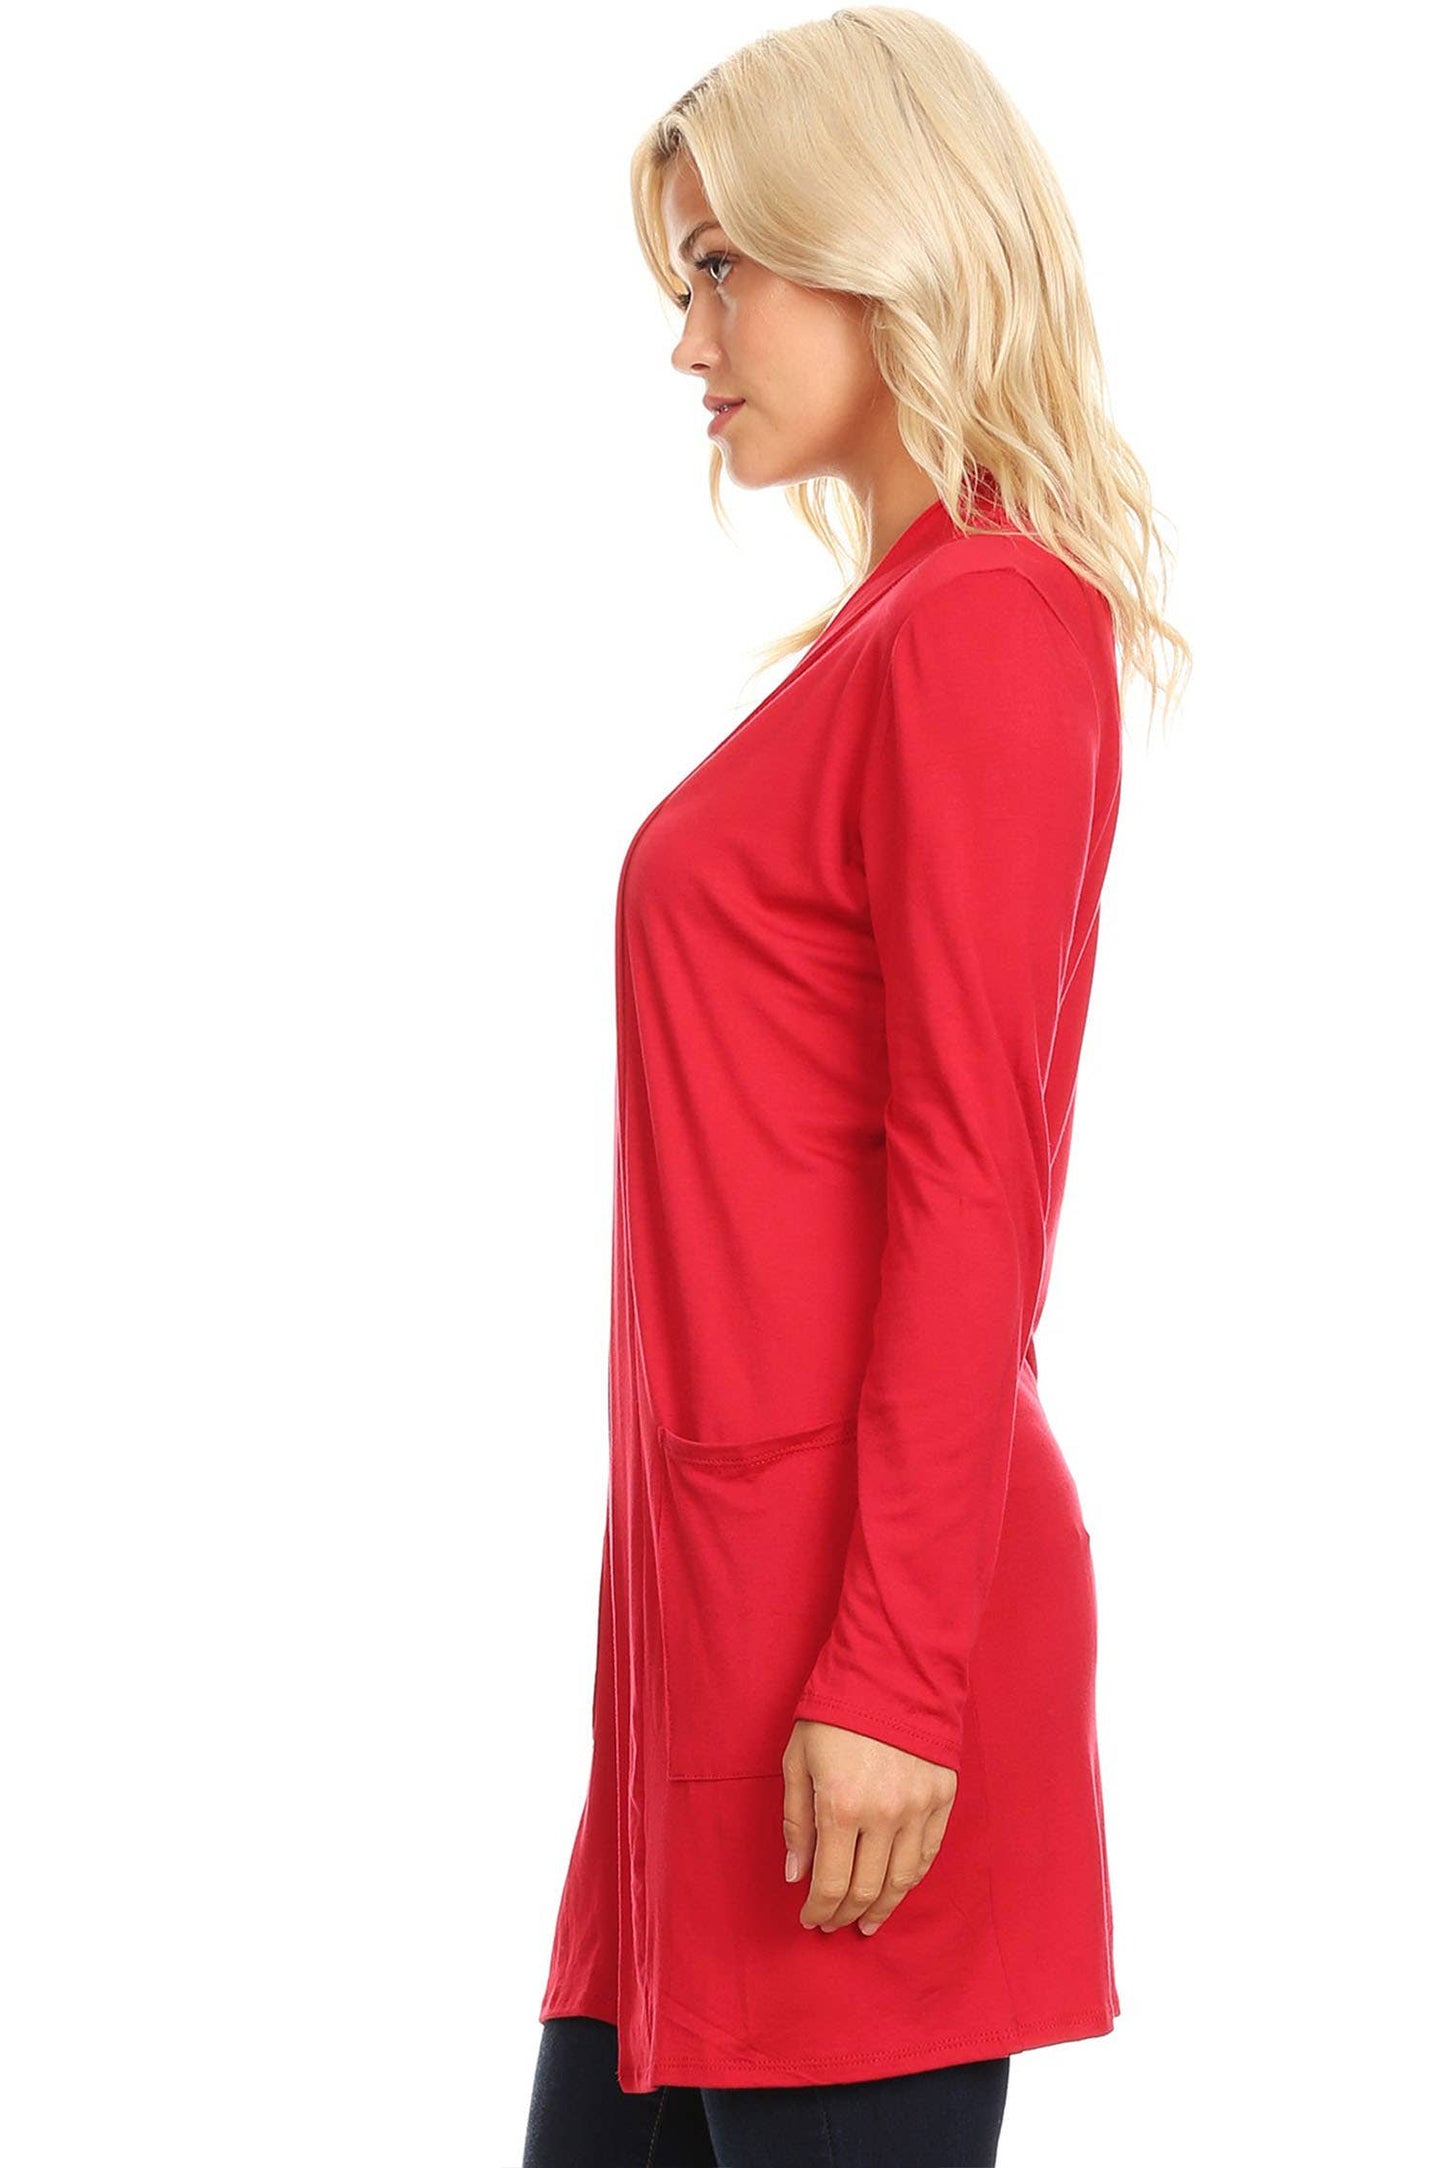 Women's Long Sleeves Side Pockets Solid Cardigan (Open Pack): Medium / Plum